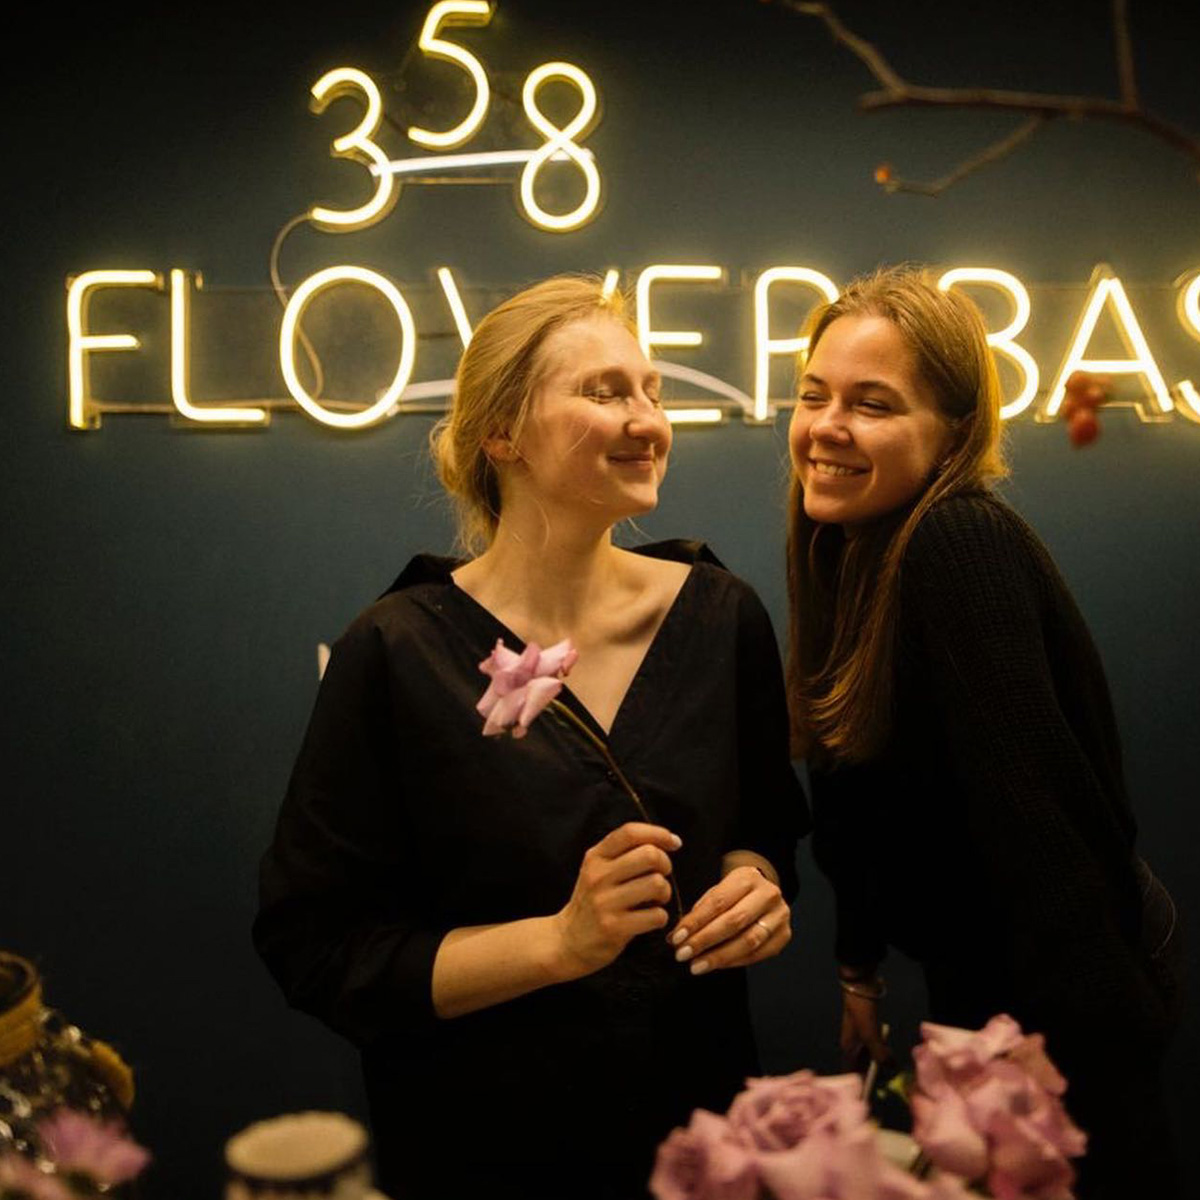 358 Flower Base Florist on Thursd feature.jpg